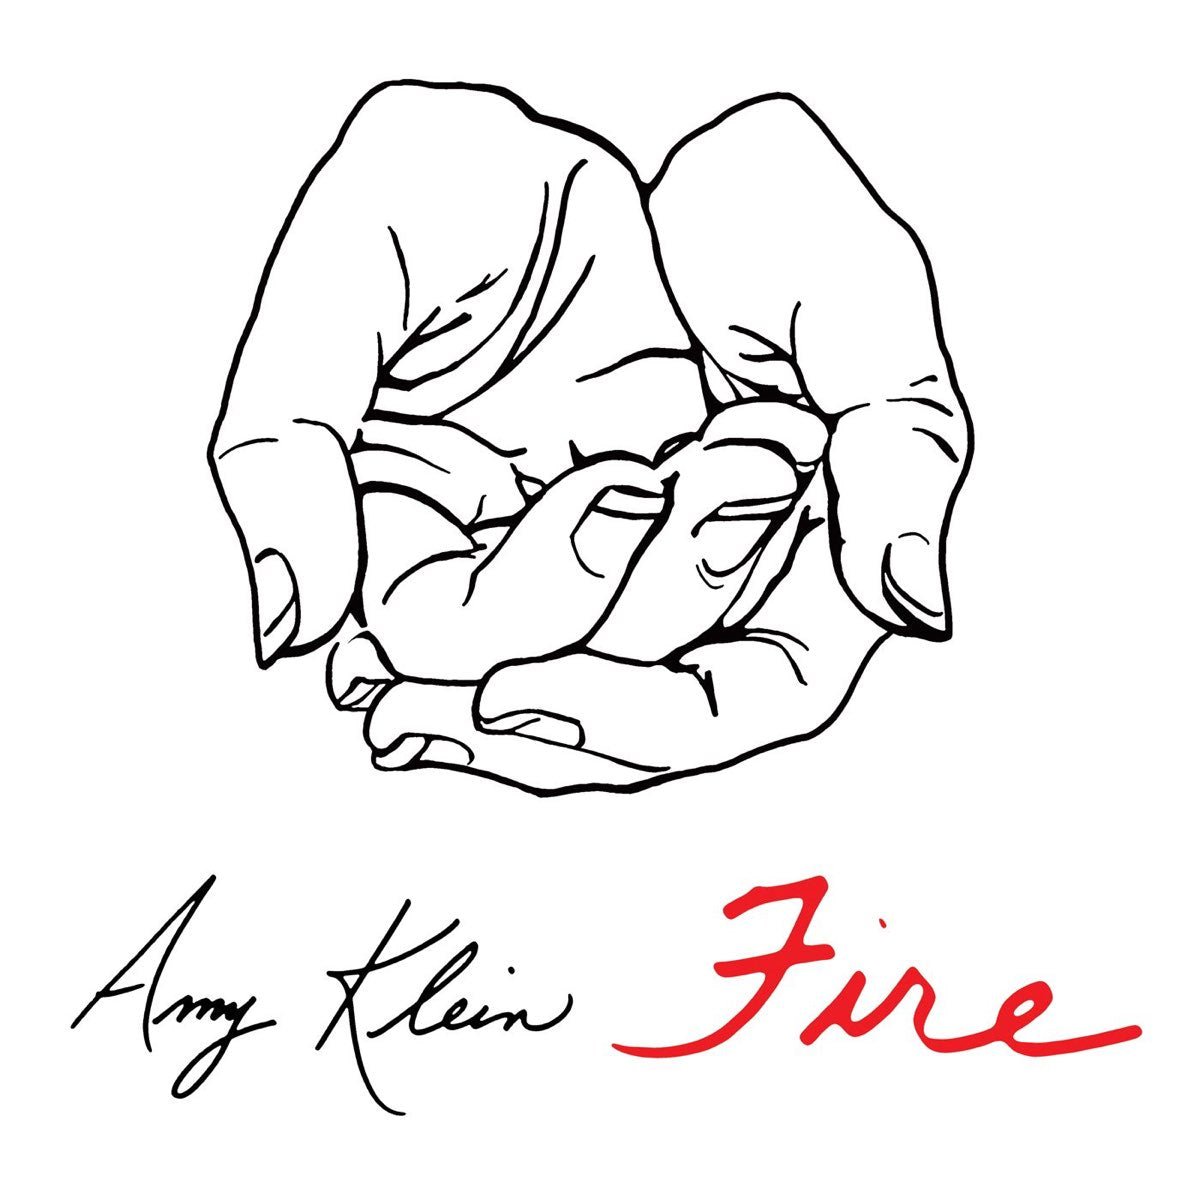 Amy Klein - Fire [New Vinyl] - Tonality Records